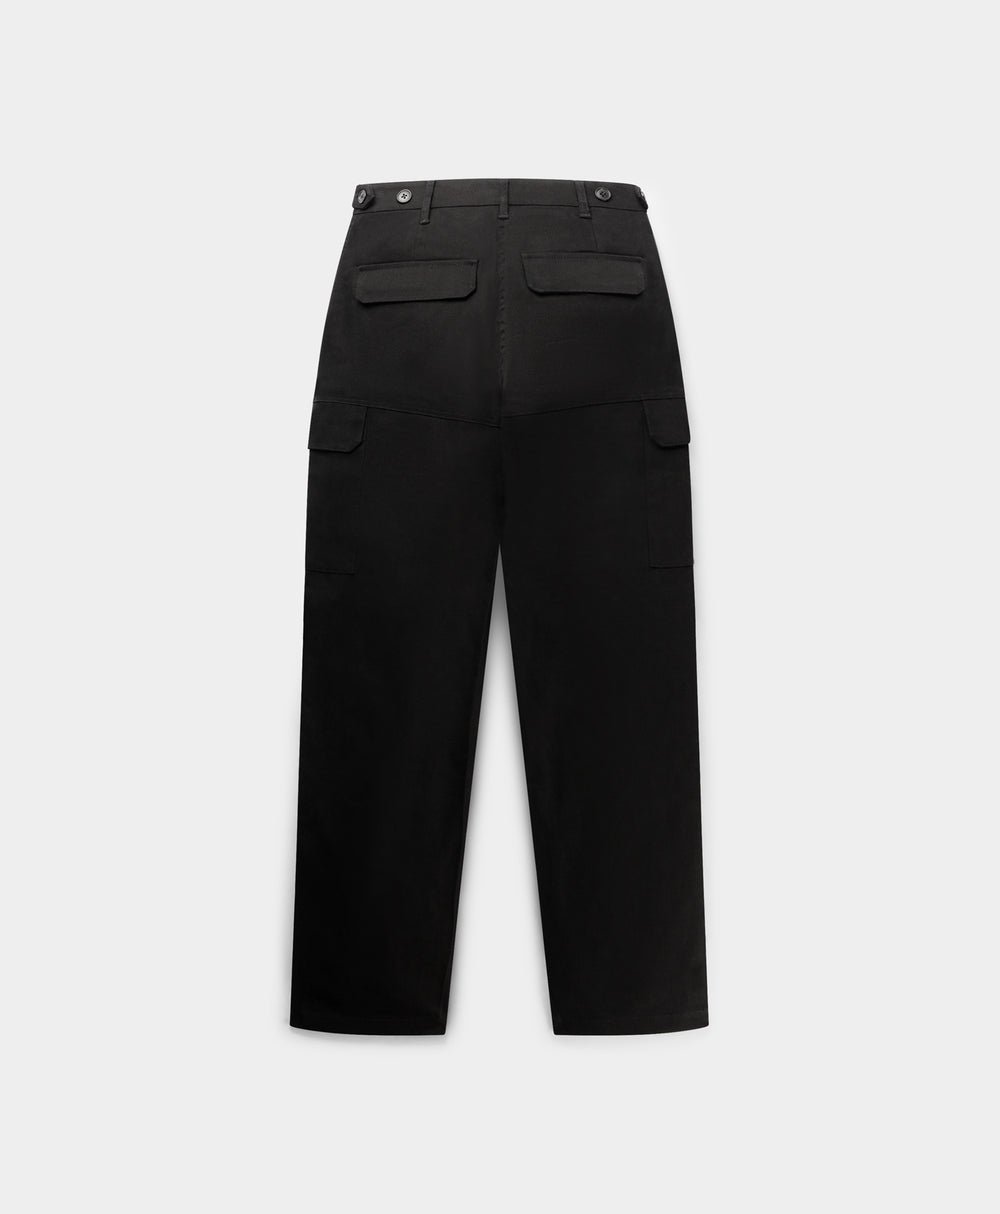 DP - Black Ezea Cargo Pants - Packshot - Rear